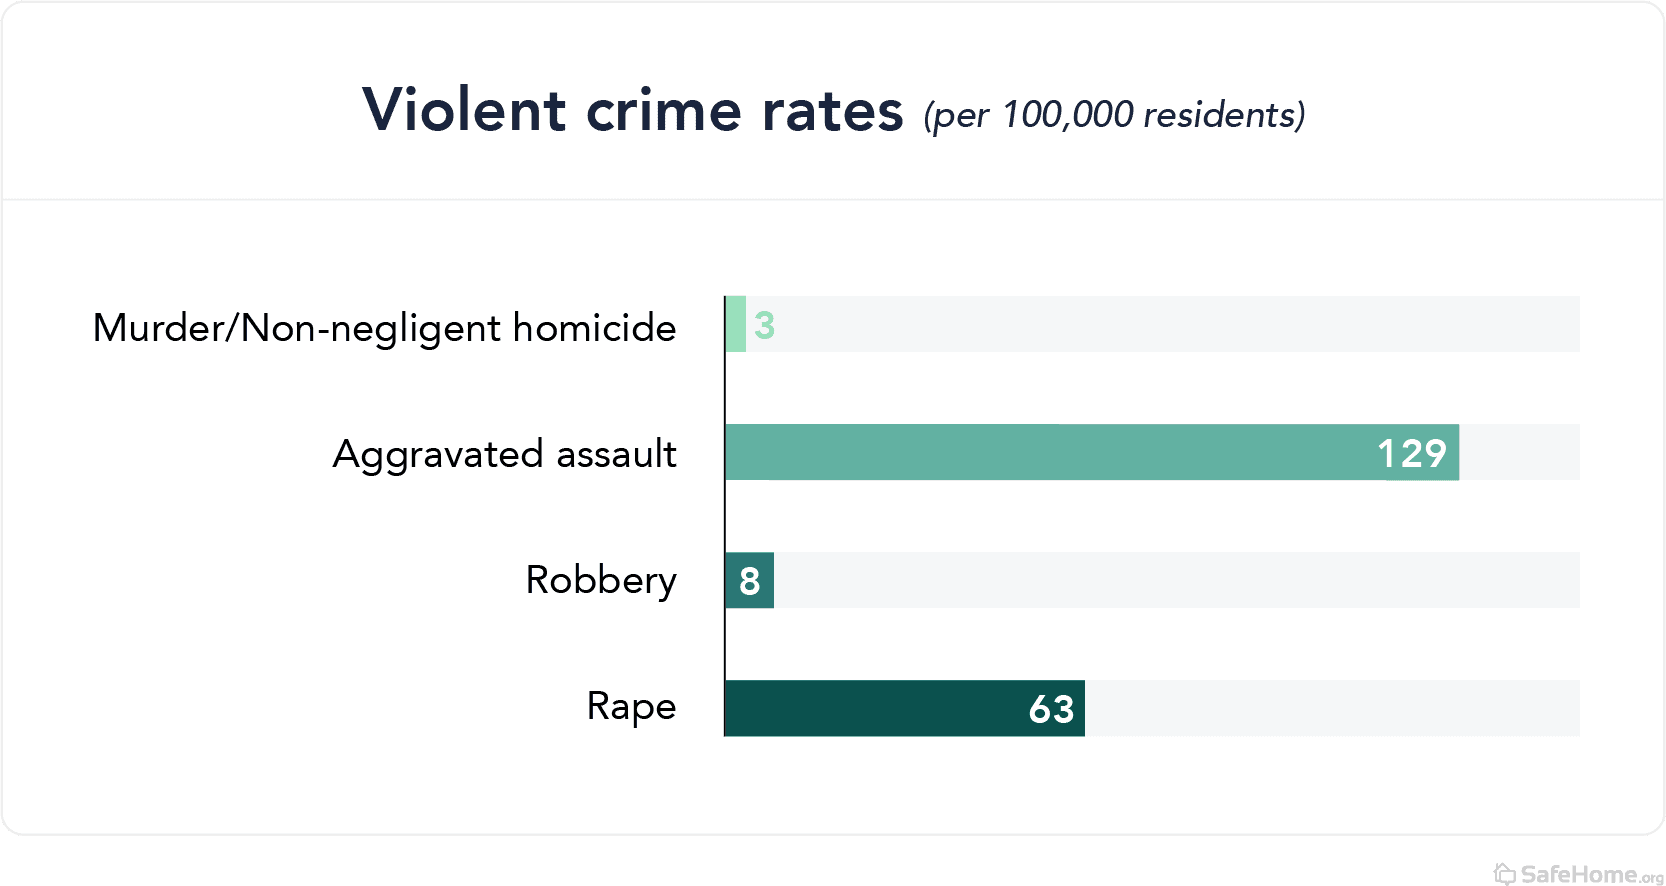 wyoming-violent crime rates